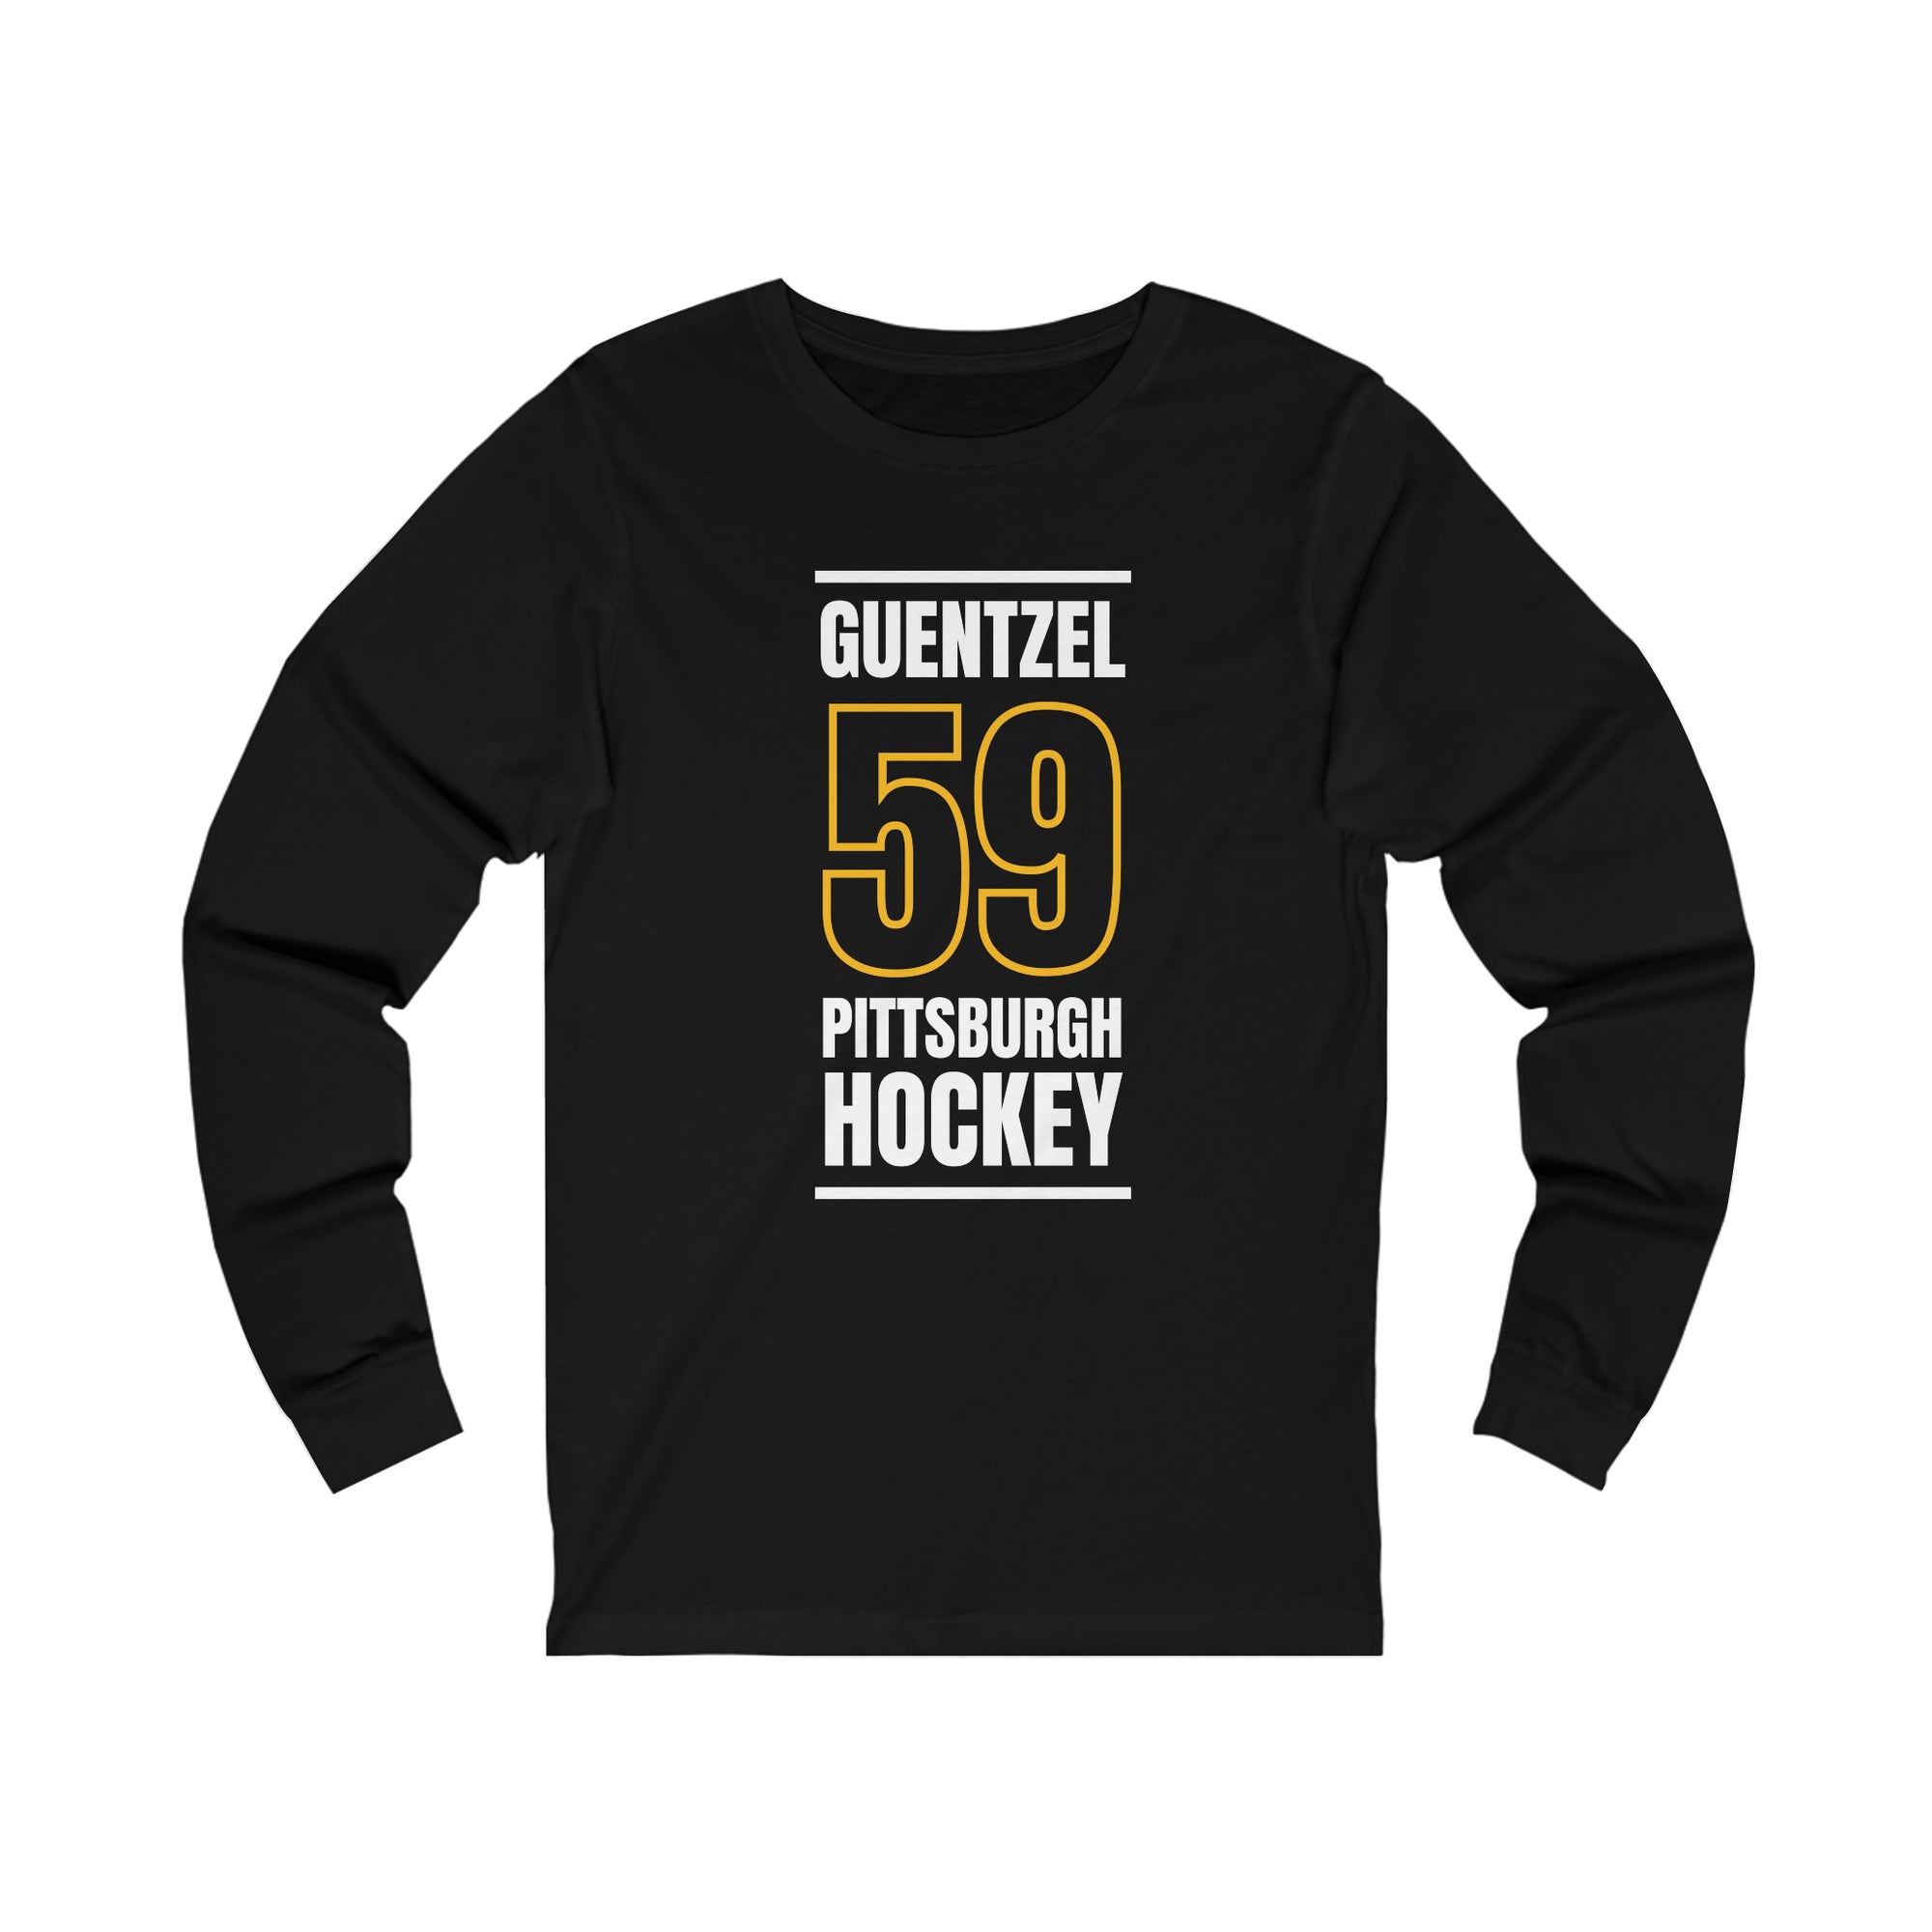 Guentzel 59 Pittsburgh Hockey Black Vertical Design Unisex Jersey Long Sleeve Shirt